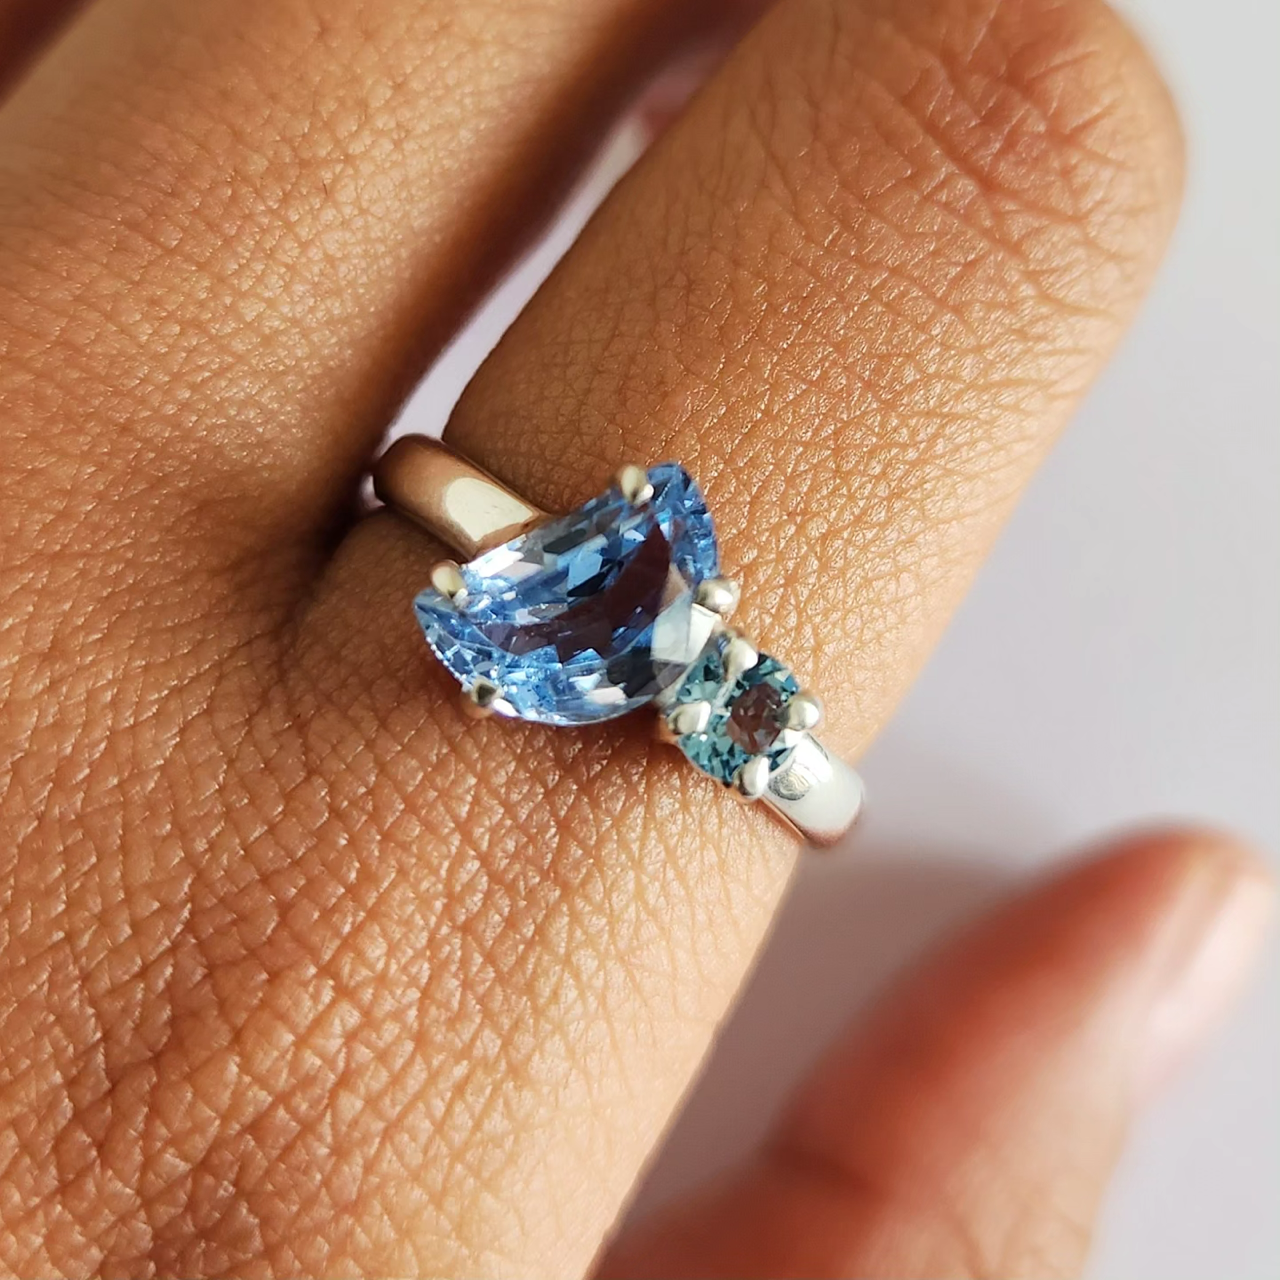 Badiono Ring Bali Silver 925 Blue Topaz Stone